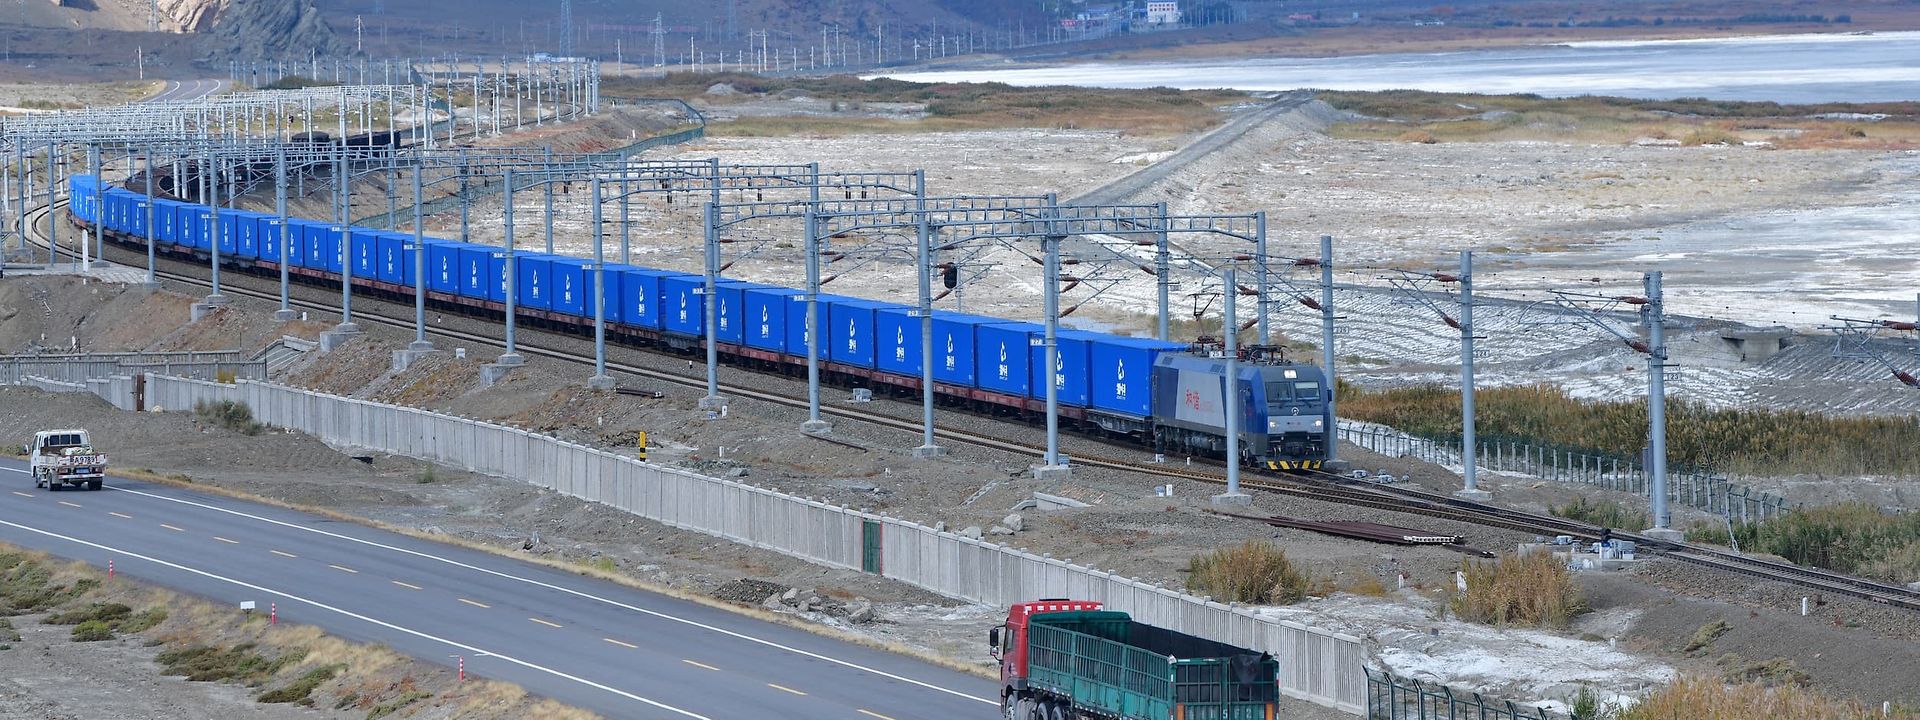 Containerzug in China vor Bergkulisse 